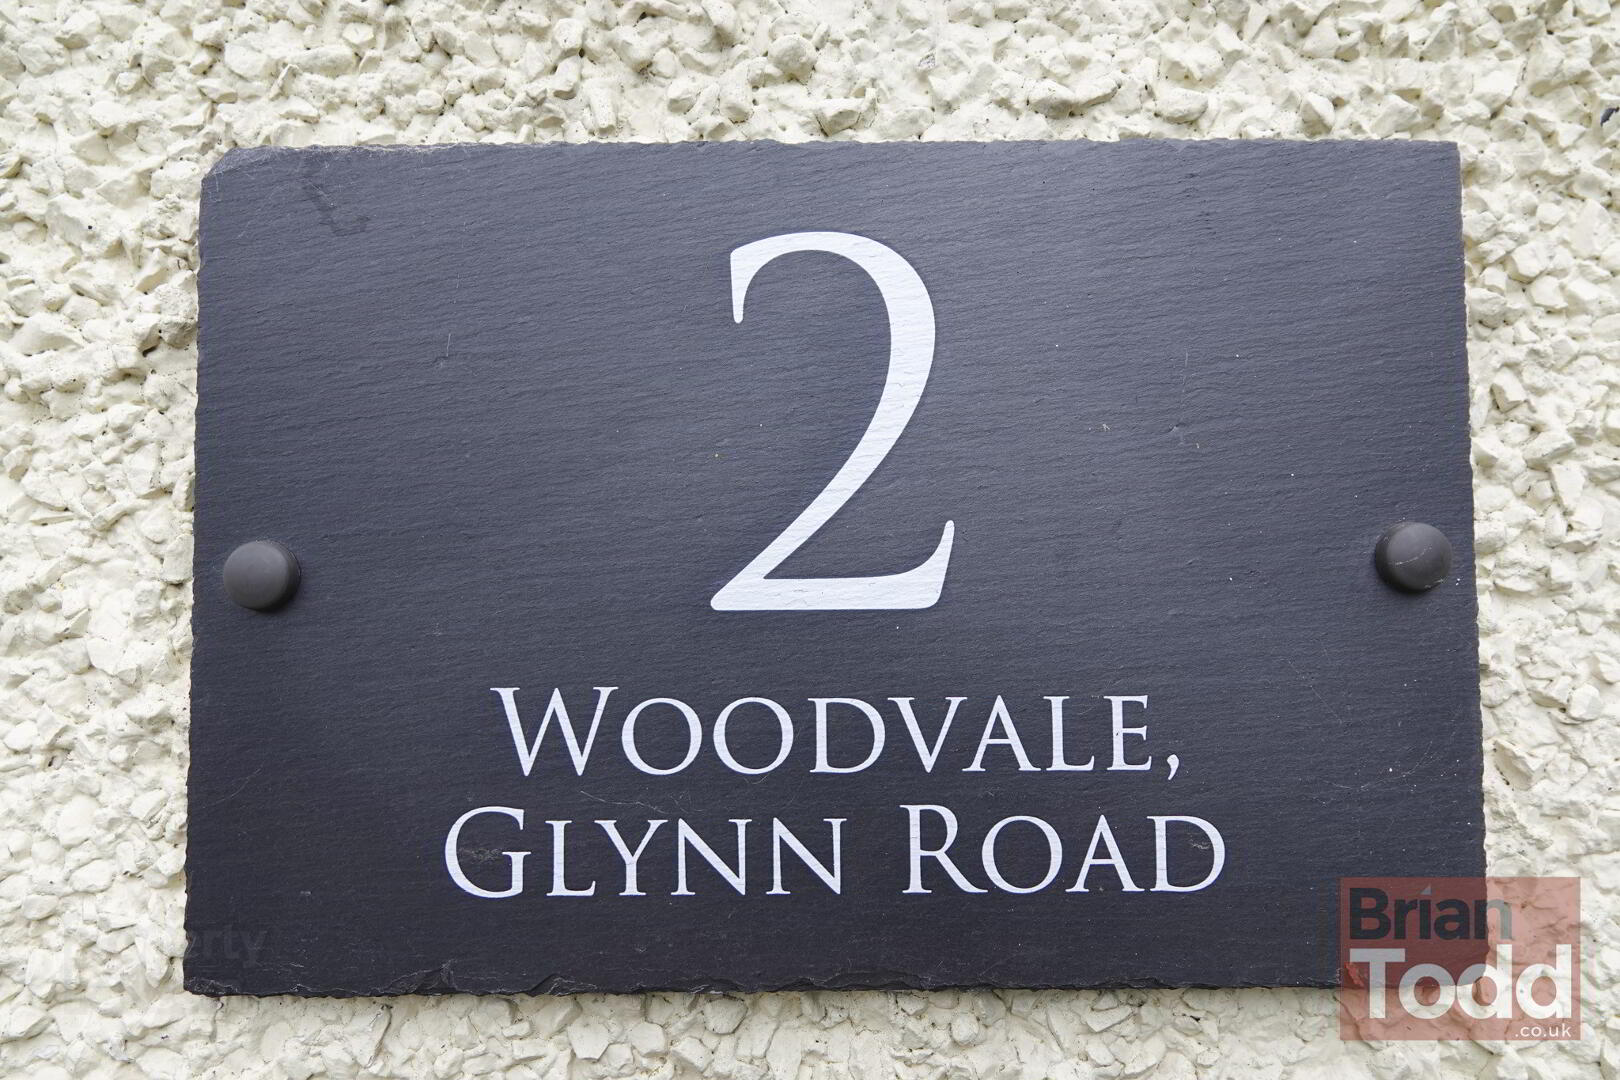 Woodvale, Glynn Road